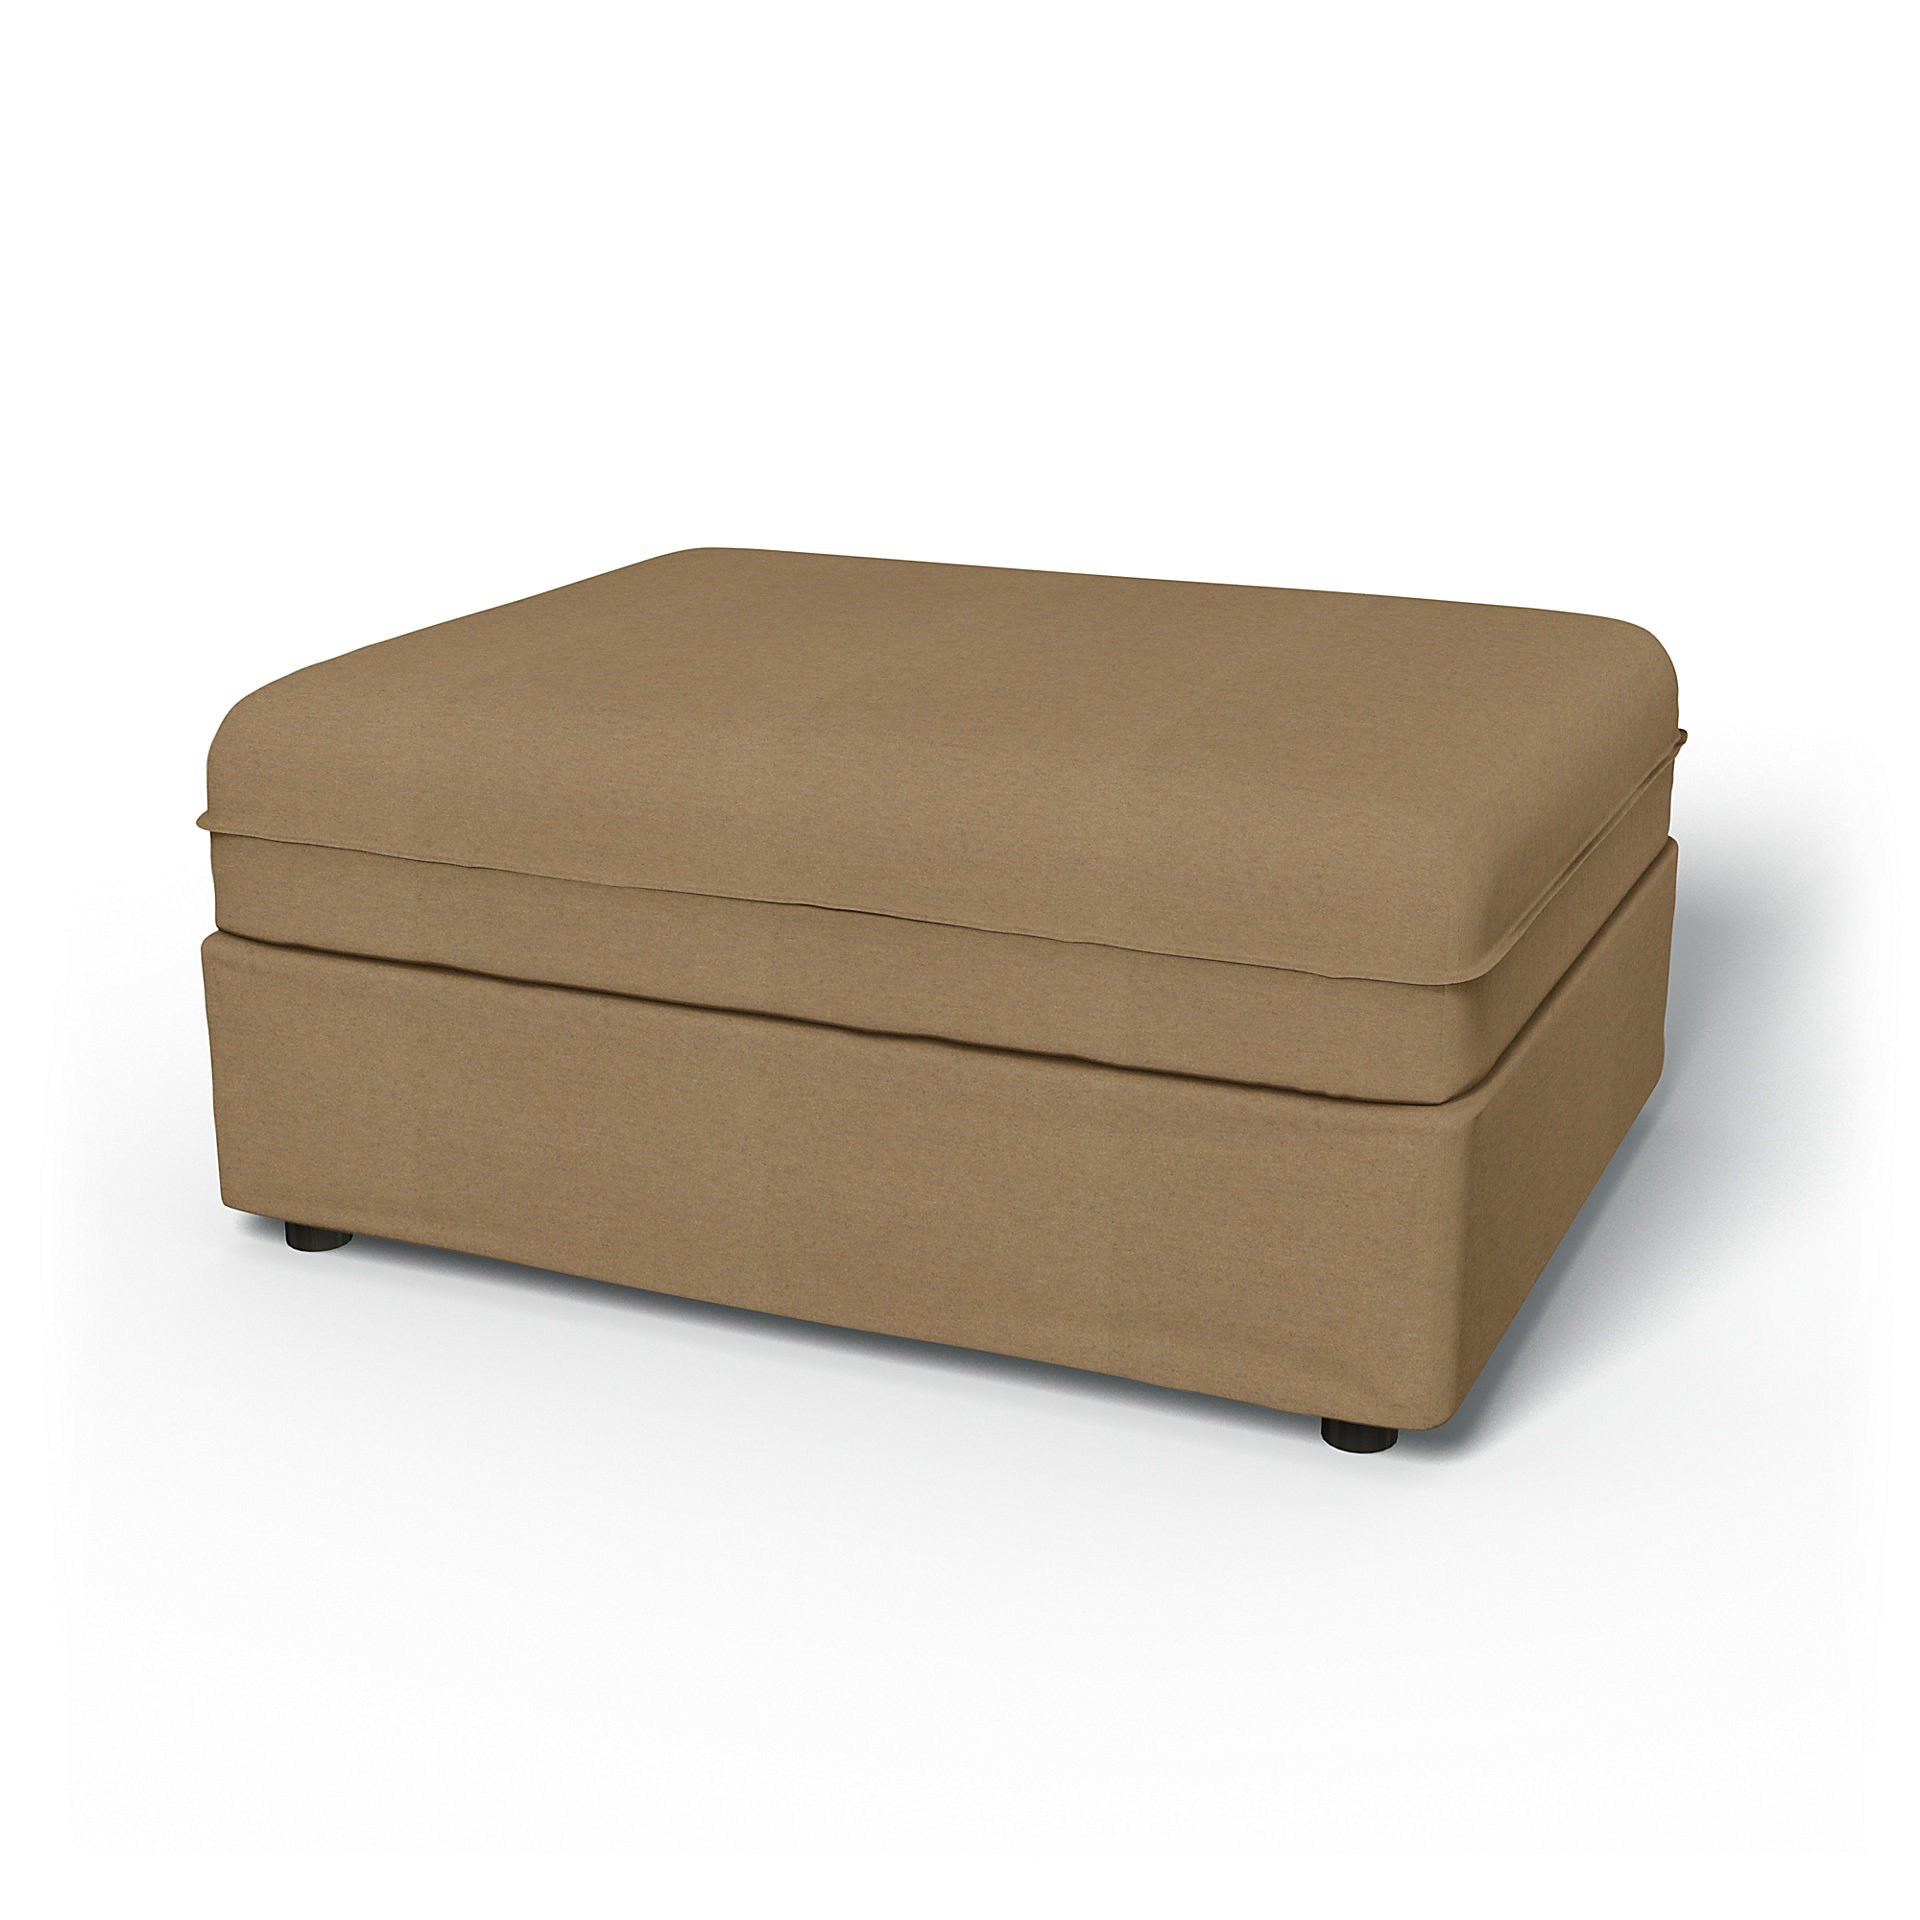 IKEA - Vallentuna Seat Module Cover 100x80cm 39x32in, Sand, Wool - Bemz